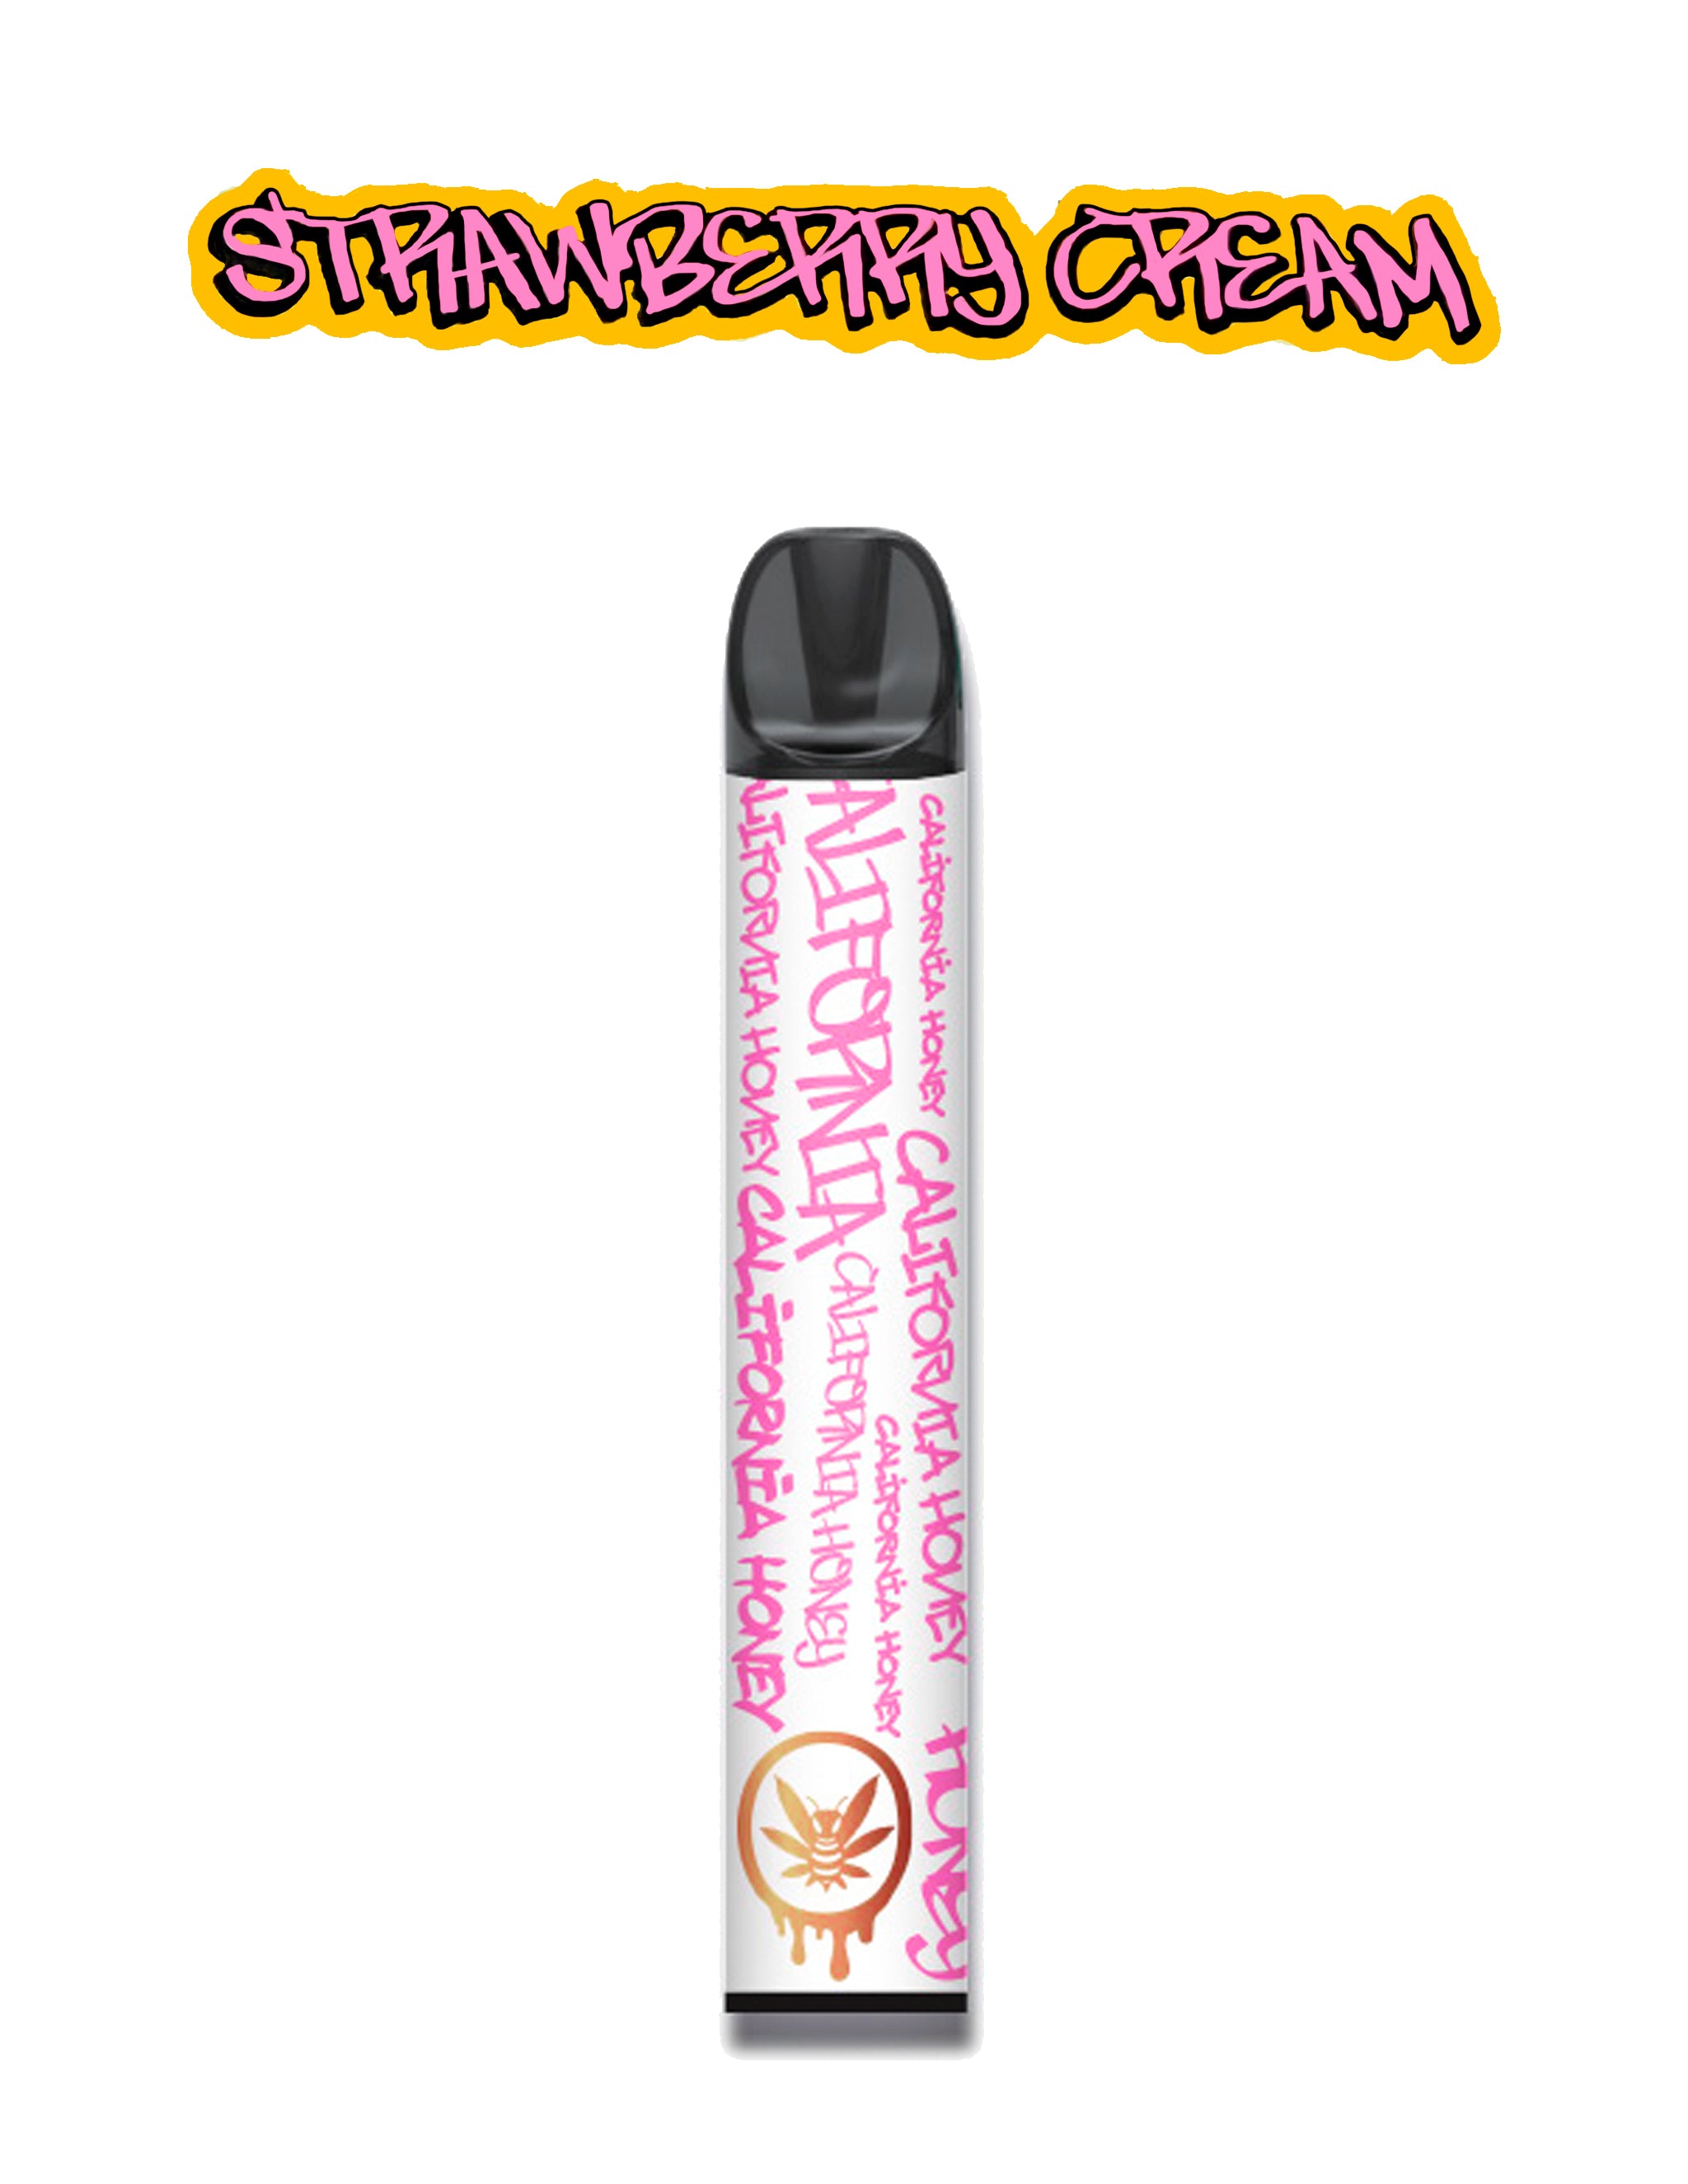 Nicotine Free Vape - Strawberry Cream